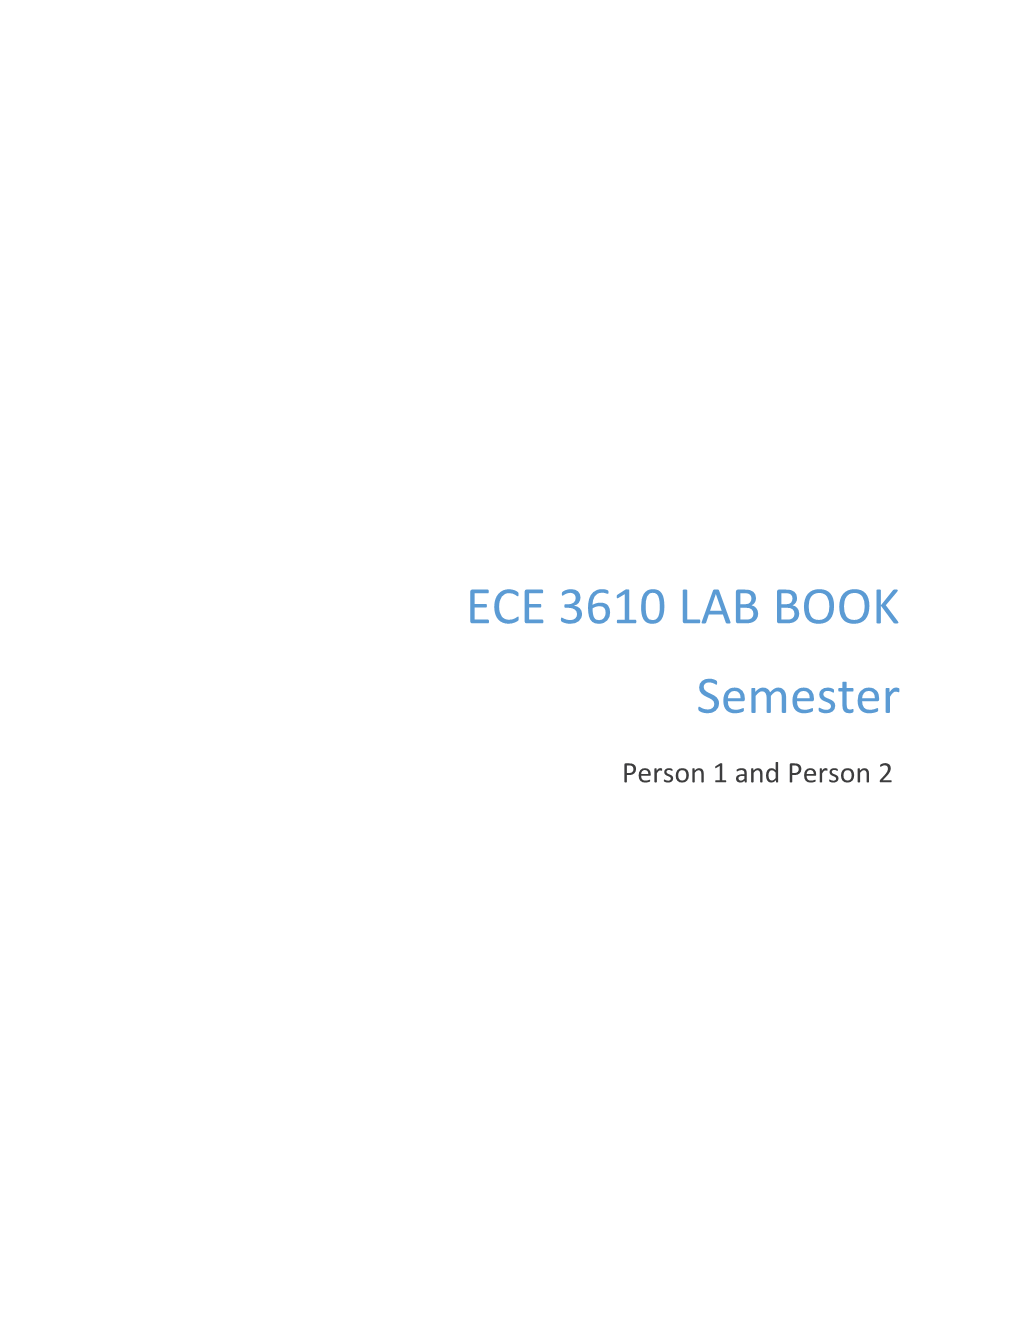 ECE 3610 Lab Book Fall 2016